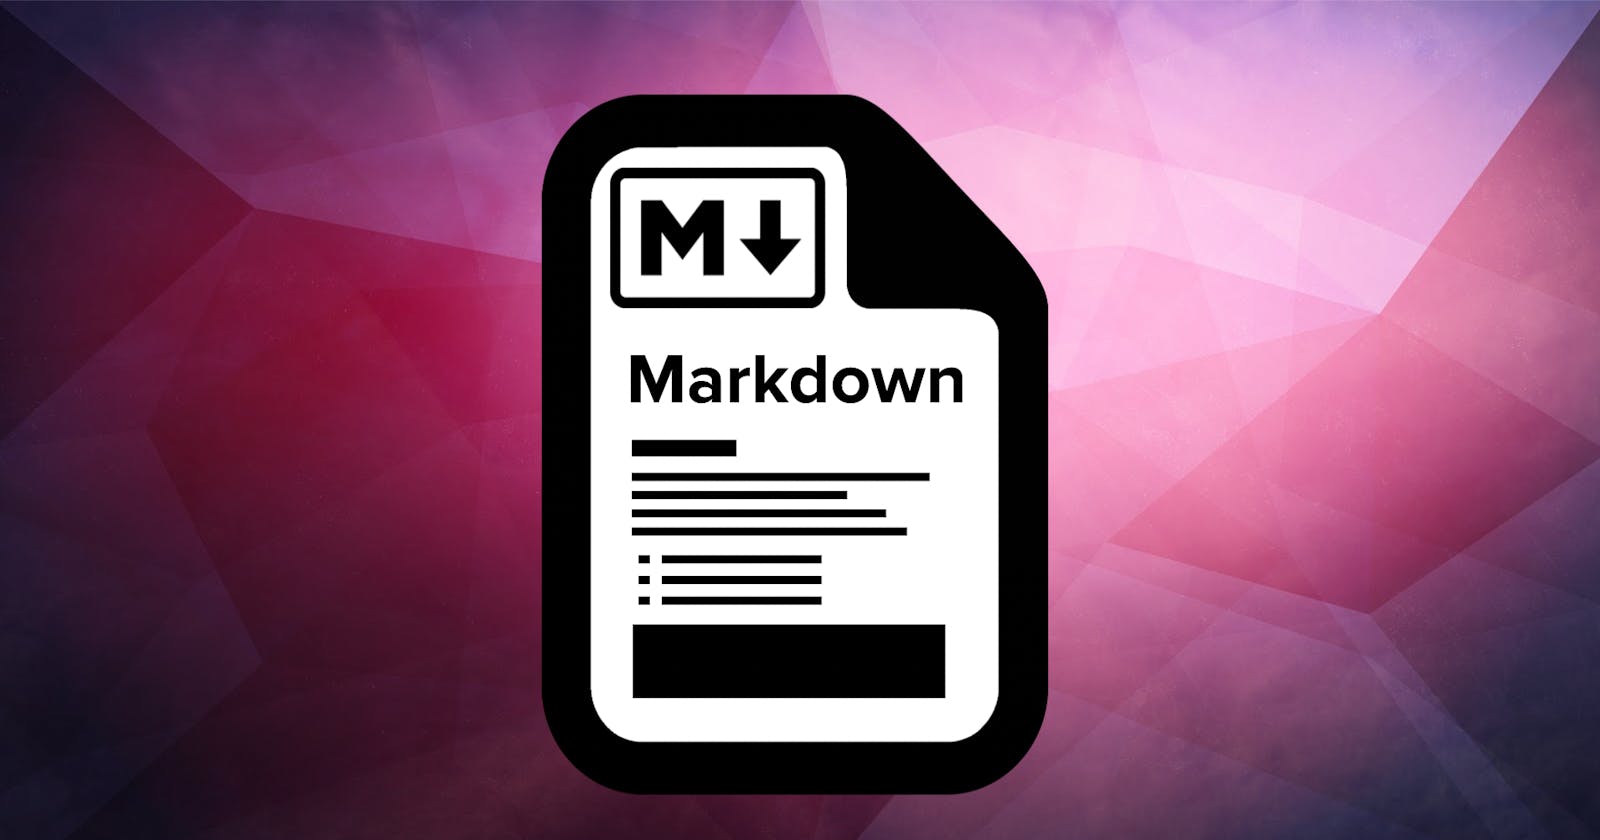 Markdown Cheat Sheet